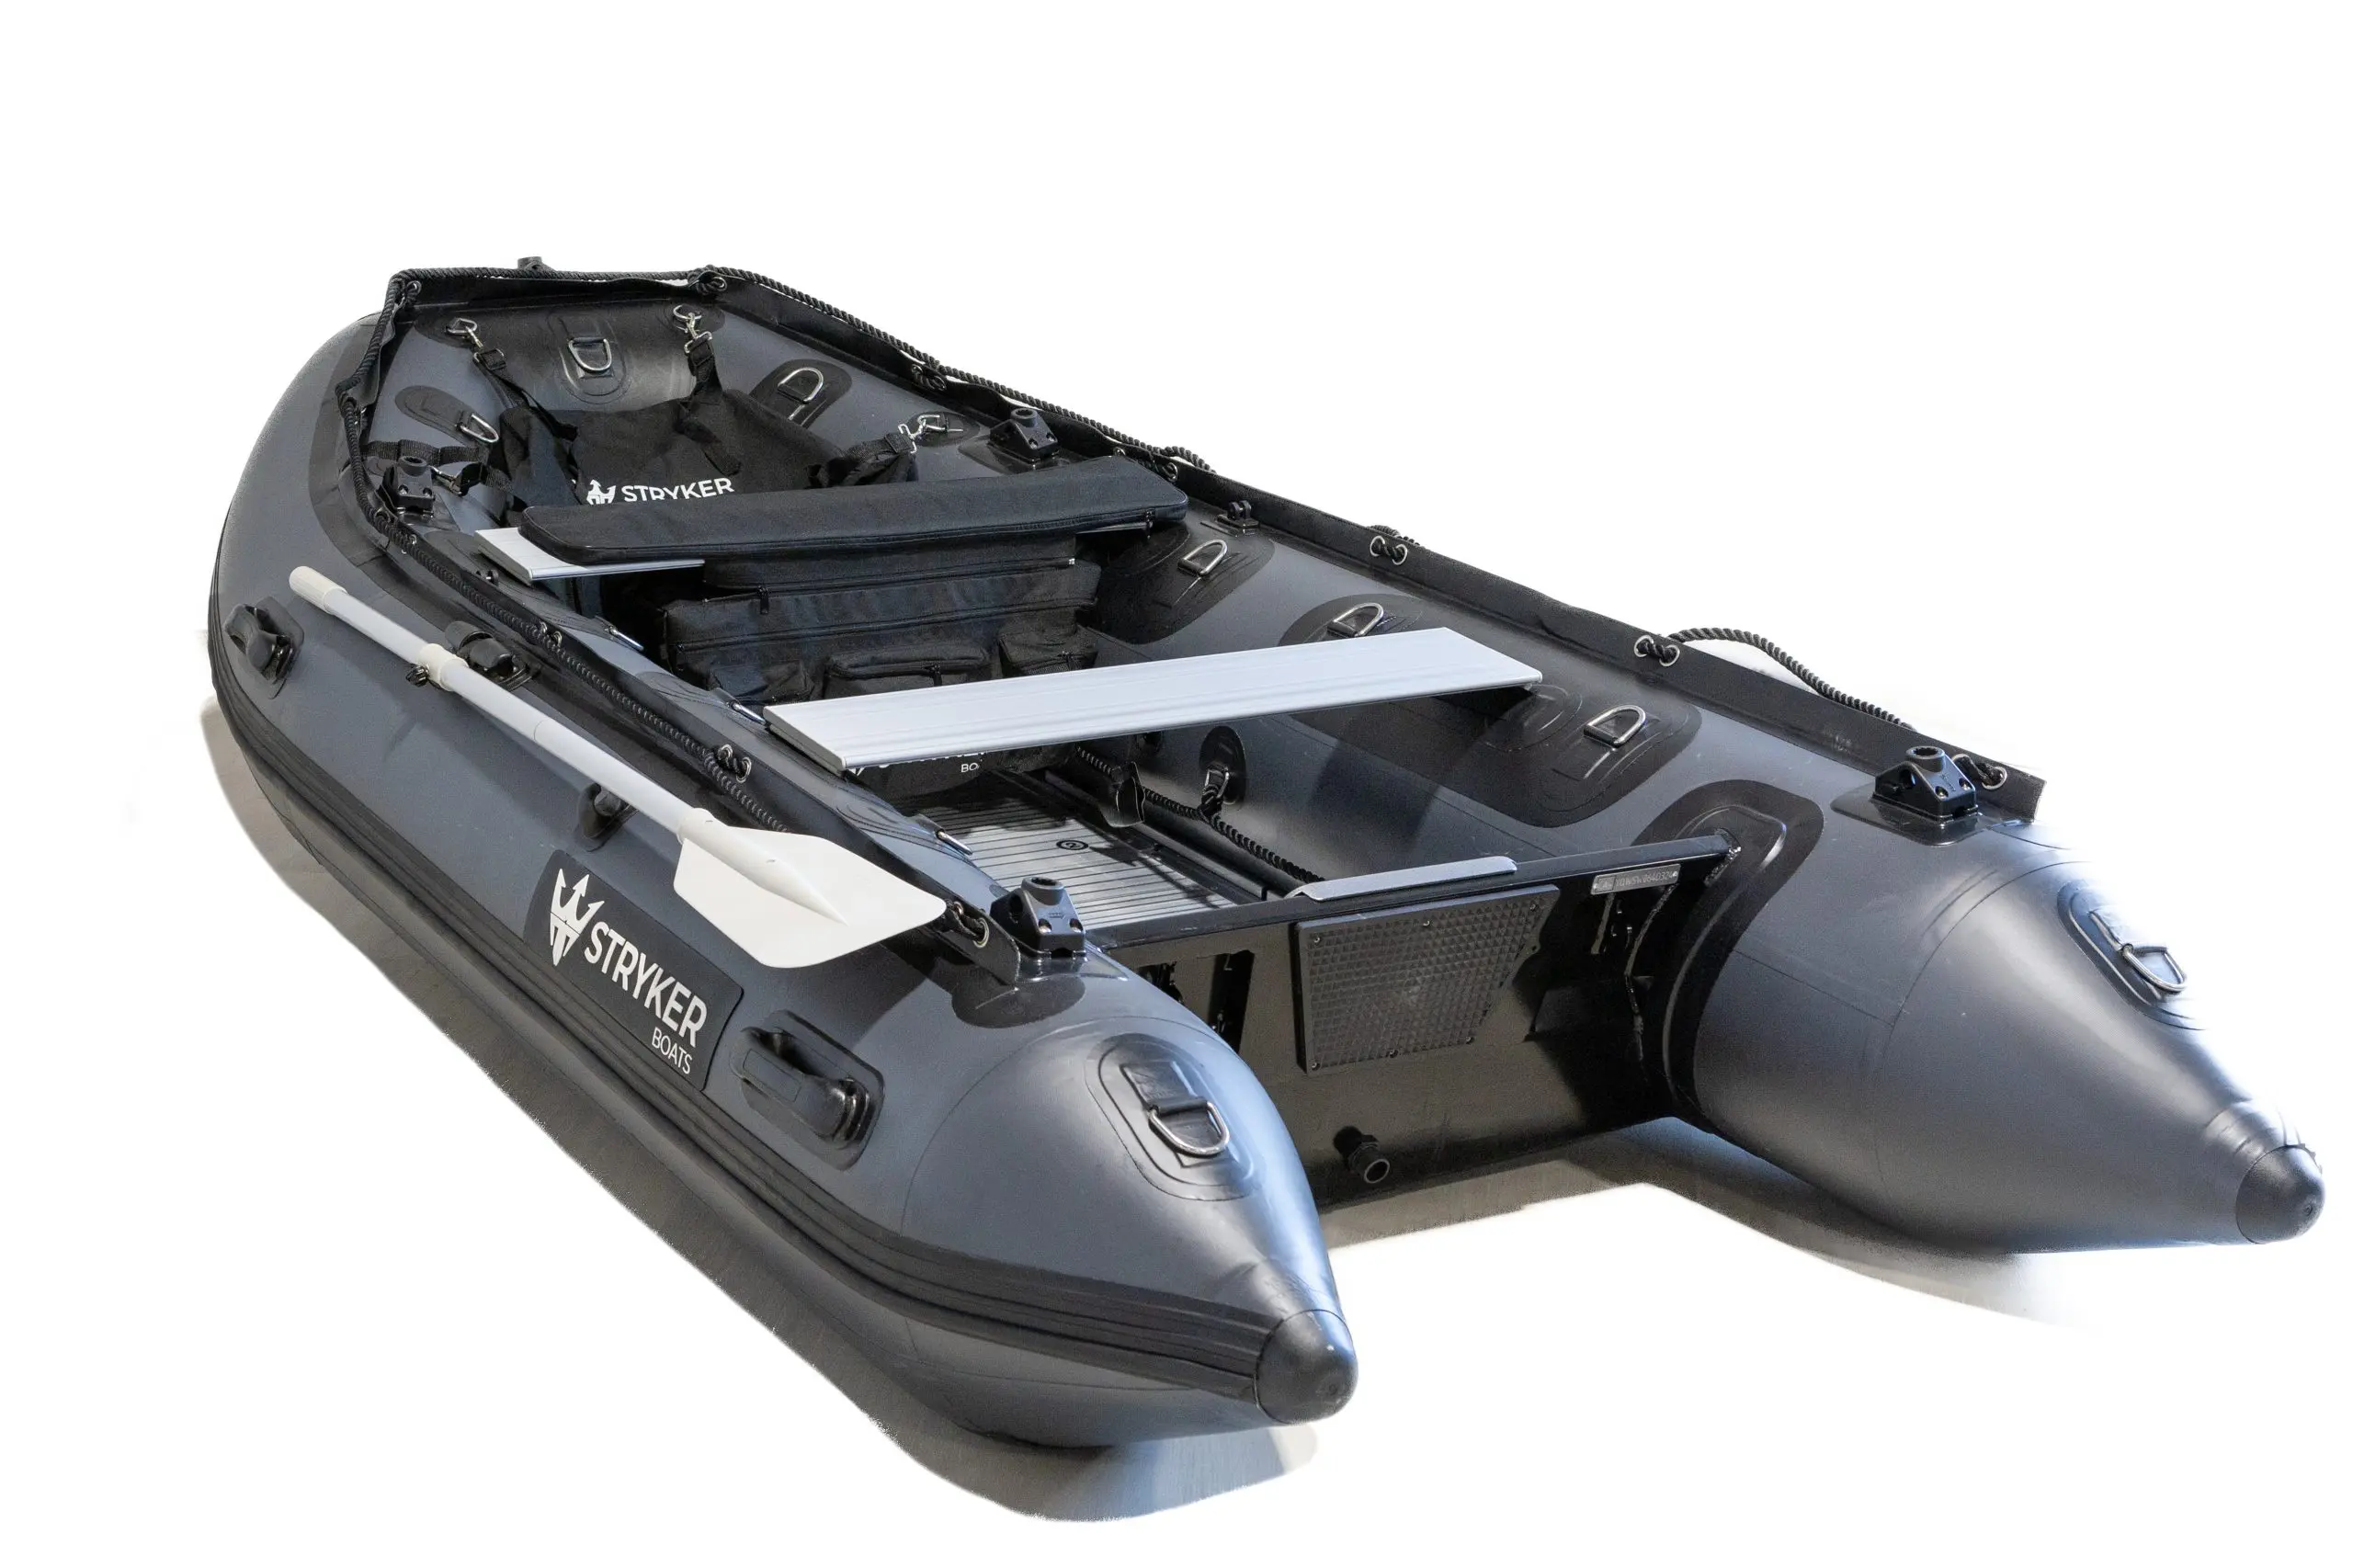 Boat Round Rail Mount, PVC Plastic Kayak Track Mount Base Portable